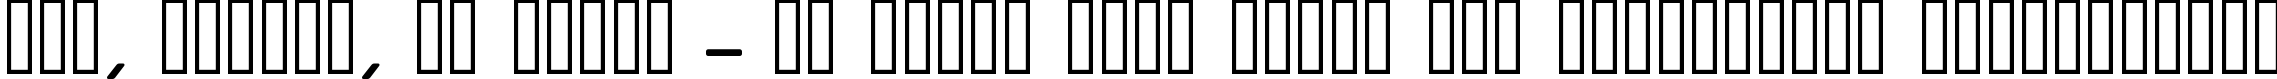 Пример написания шрифтом Font Shui текста на украинском